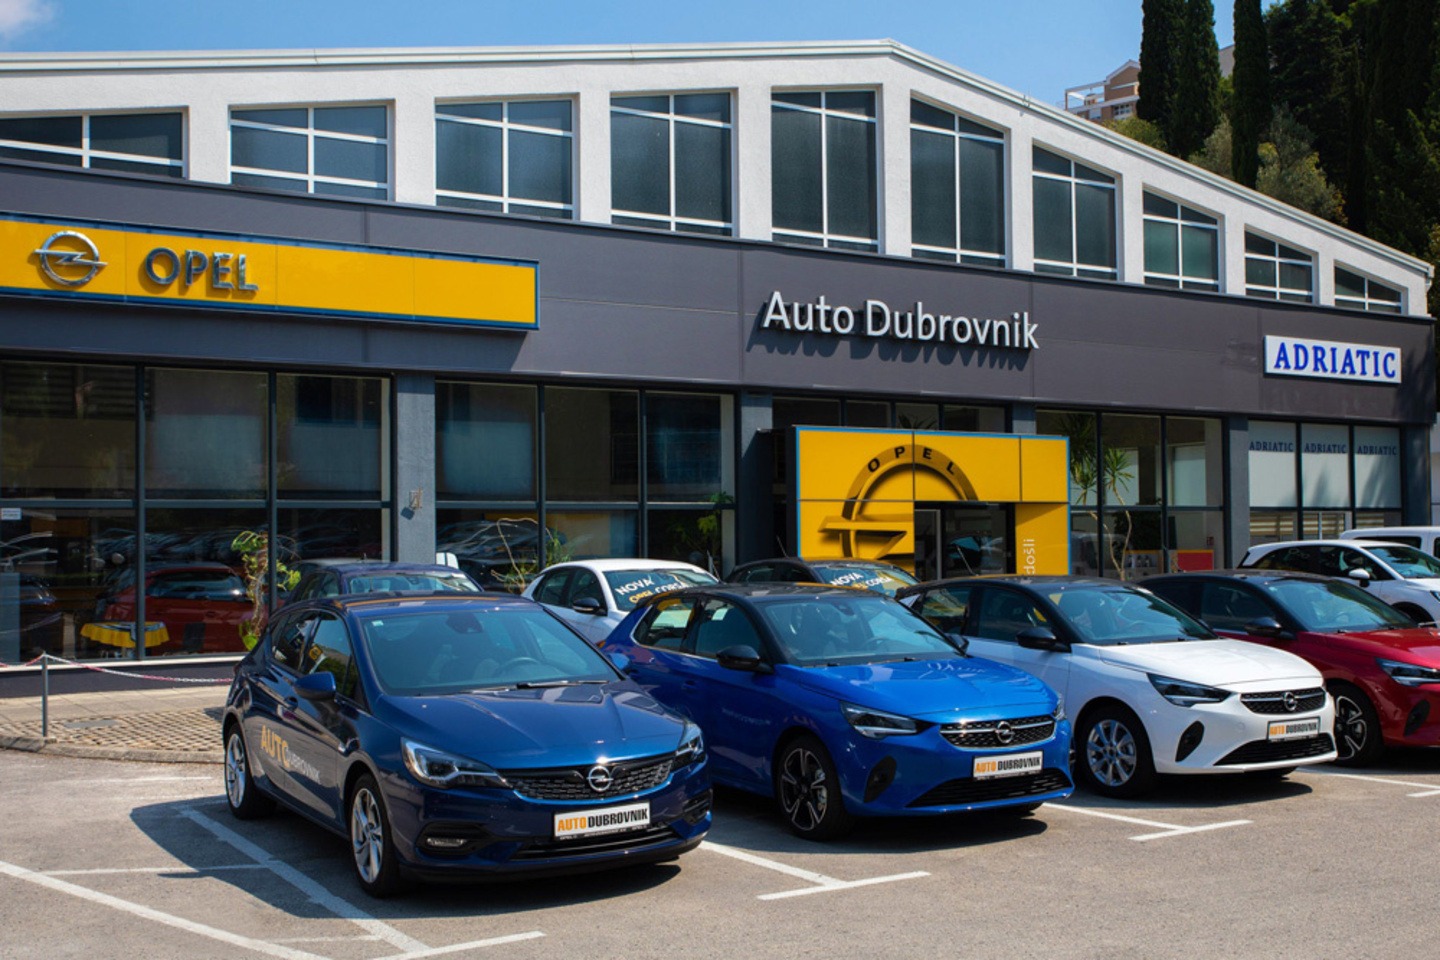 Opel Auto Dubrovnik